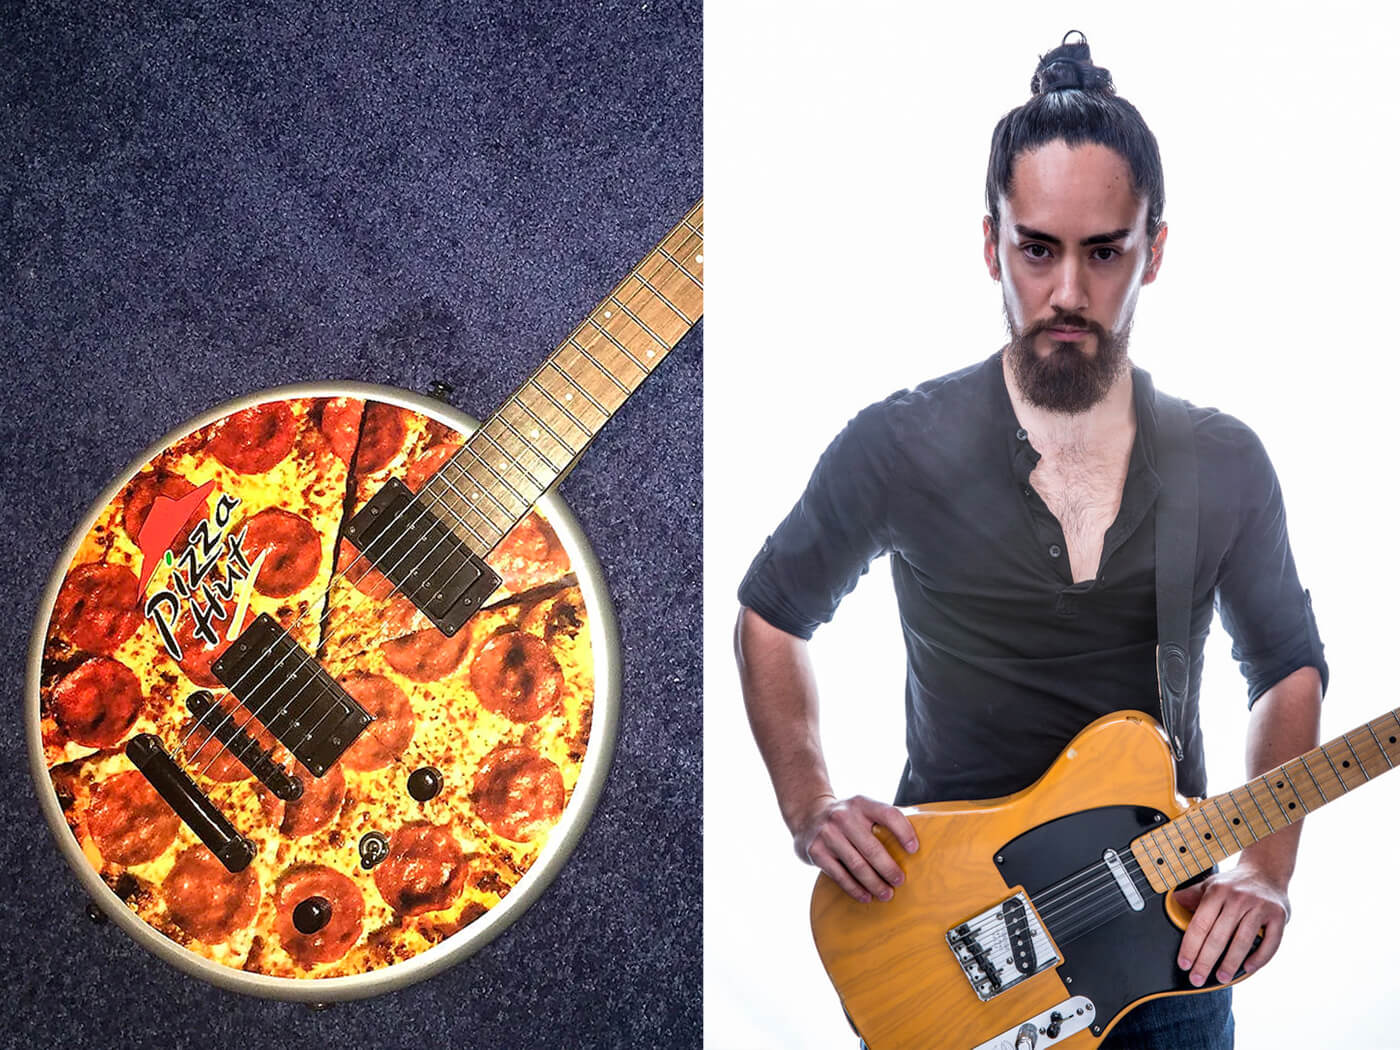 Pizza Hut Guitar and Samurai Guitarist